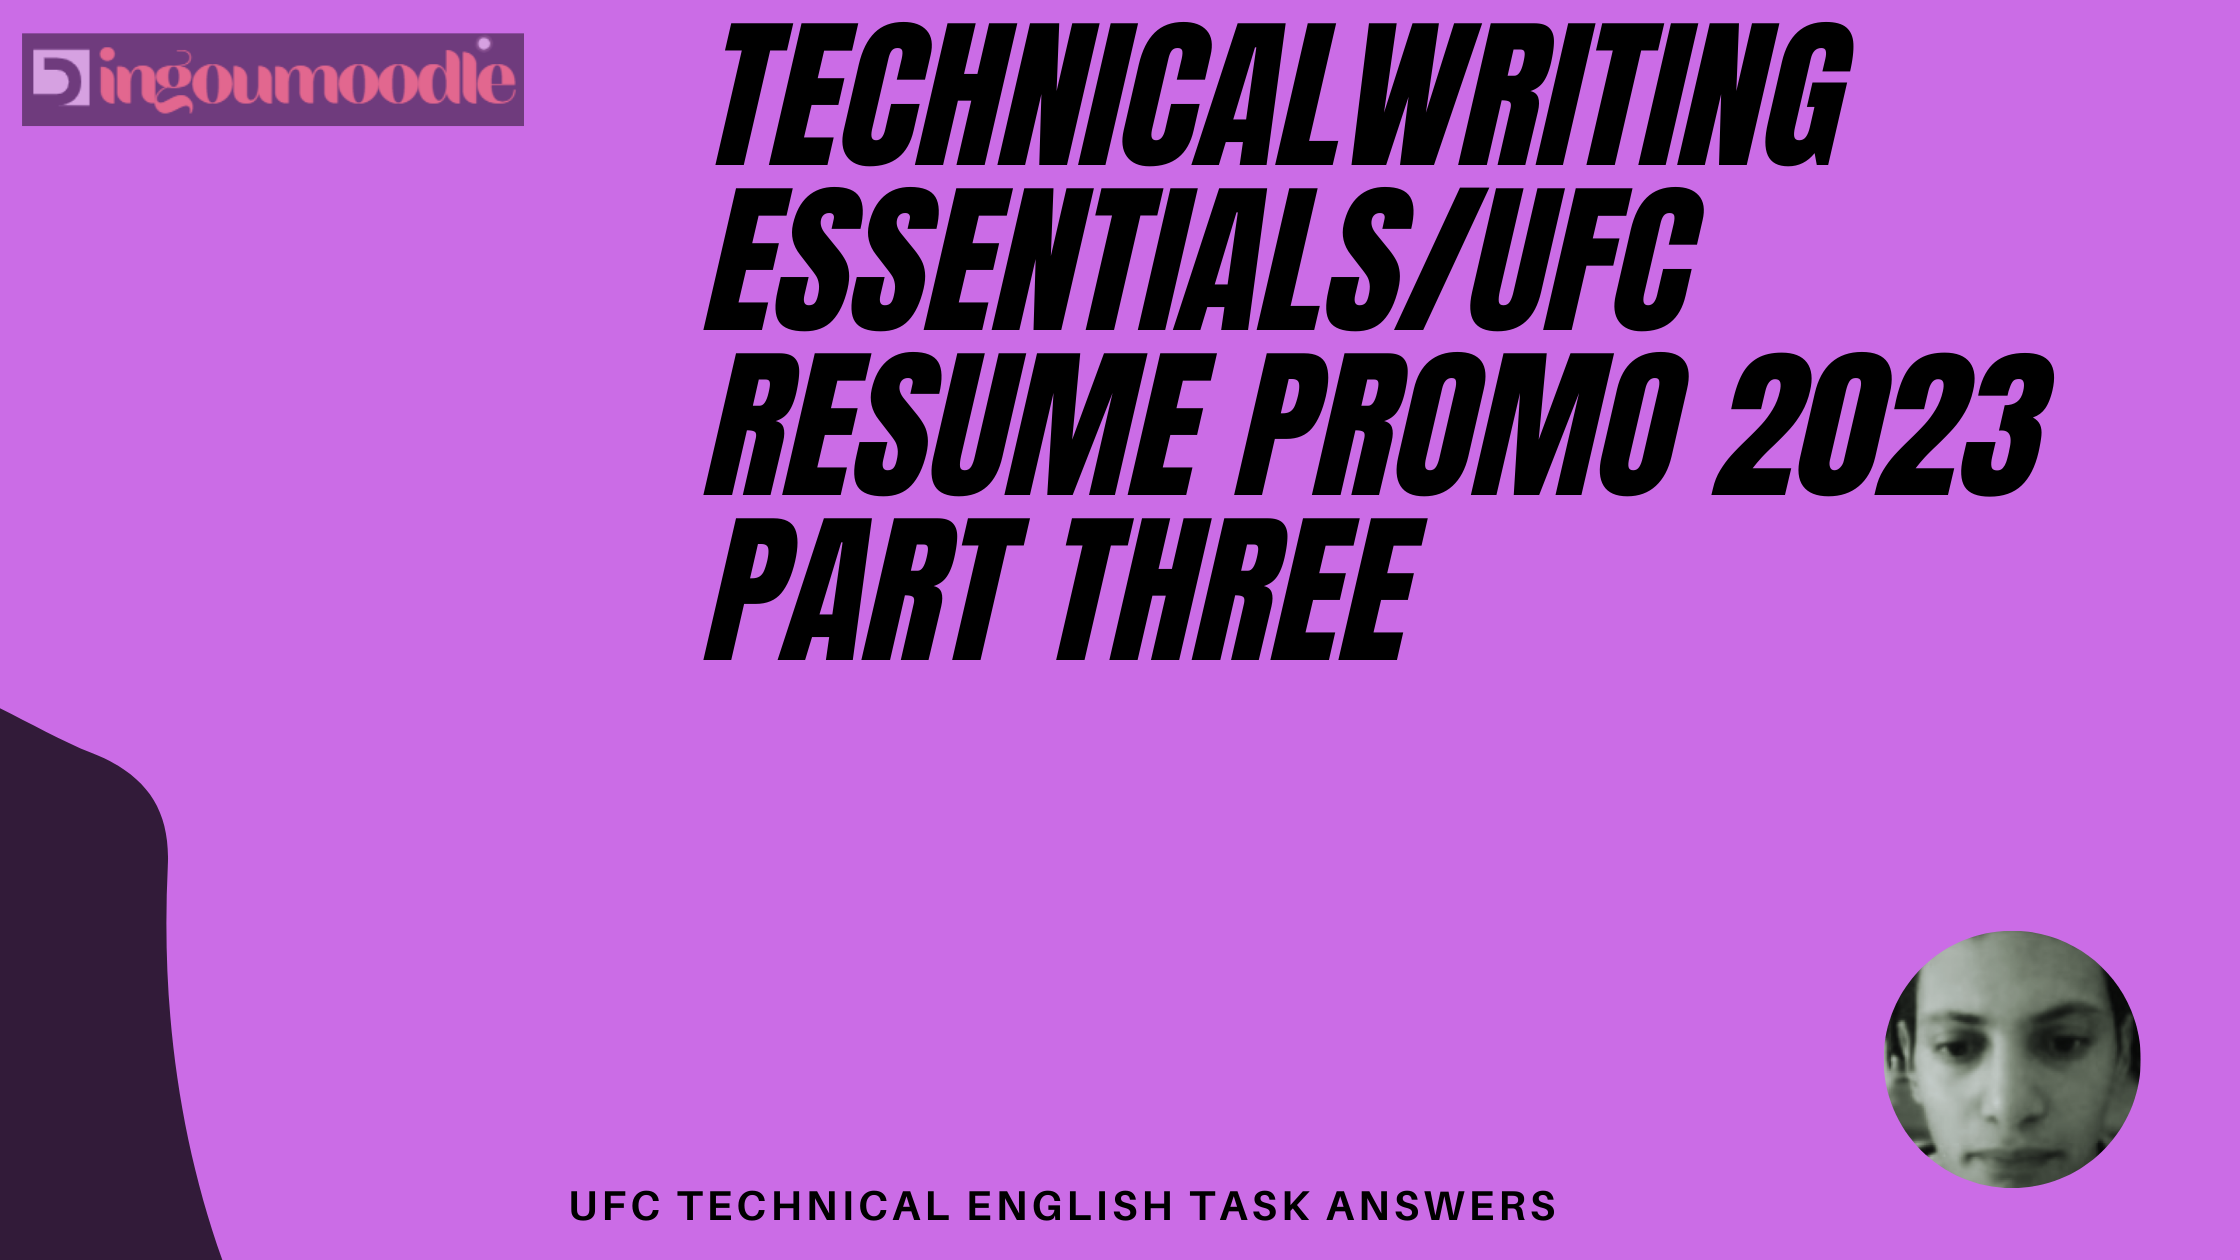 Technical Writing Essentials☹Part three/ résumer promo 2023